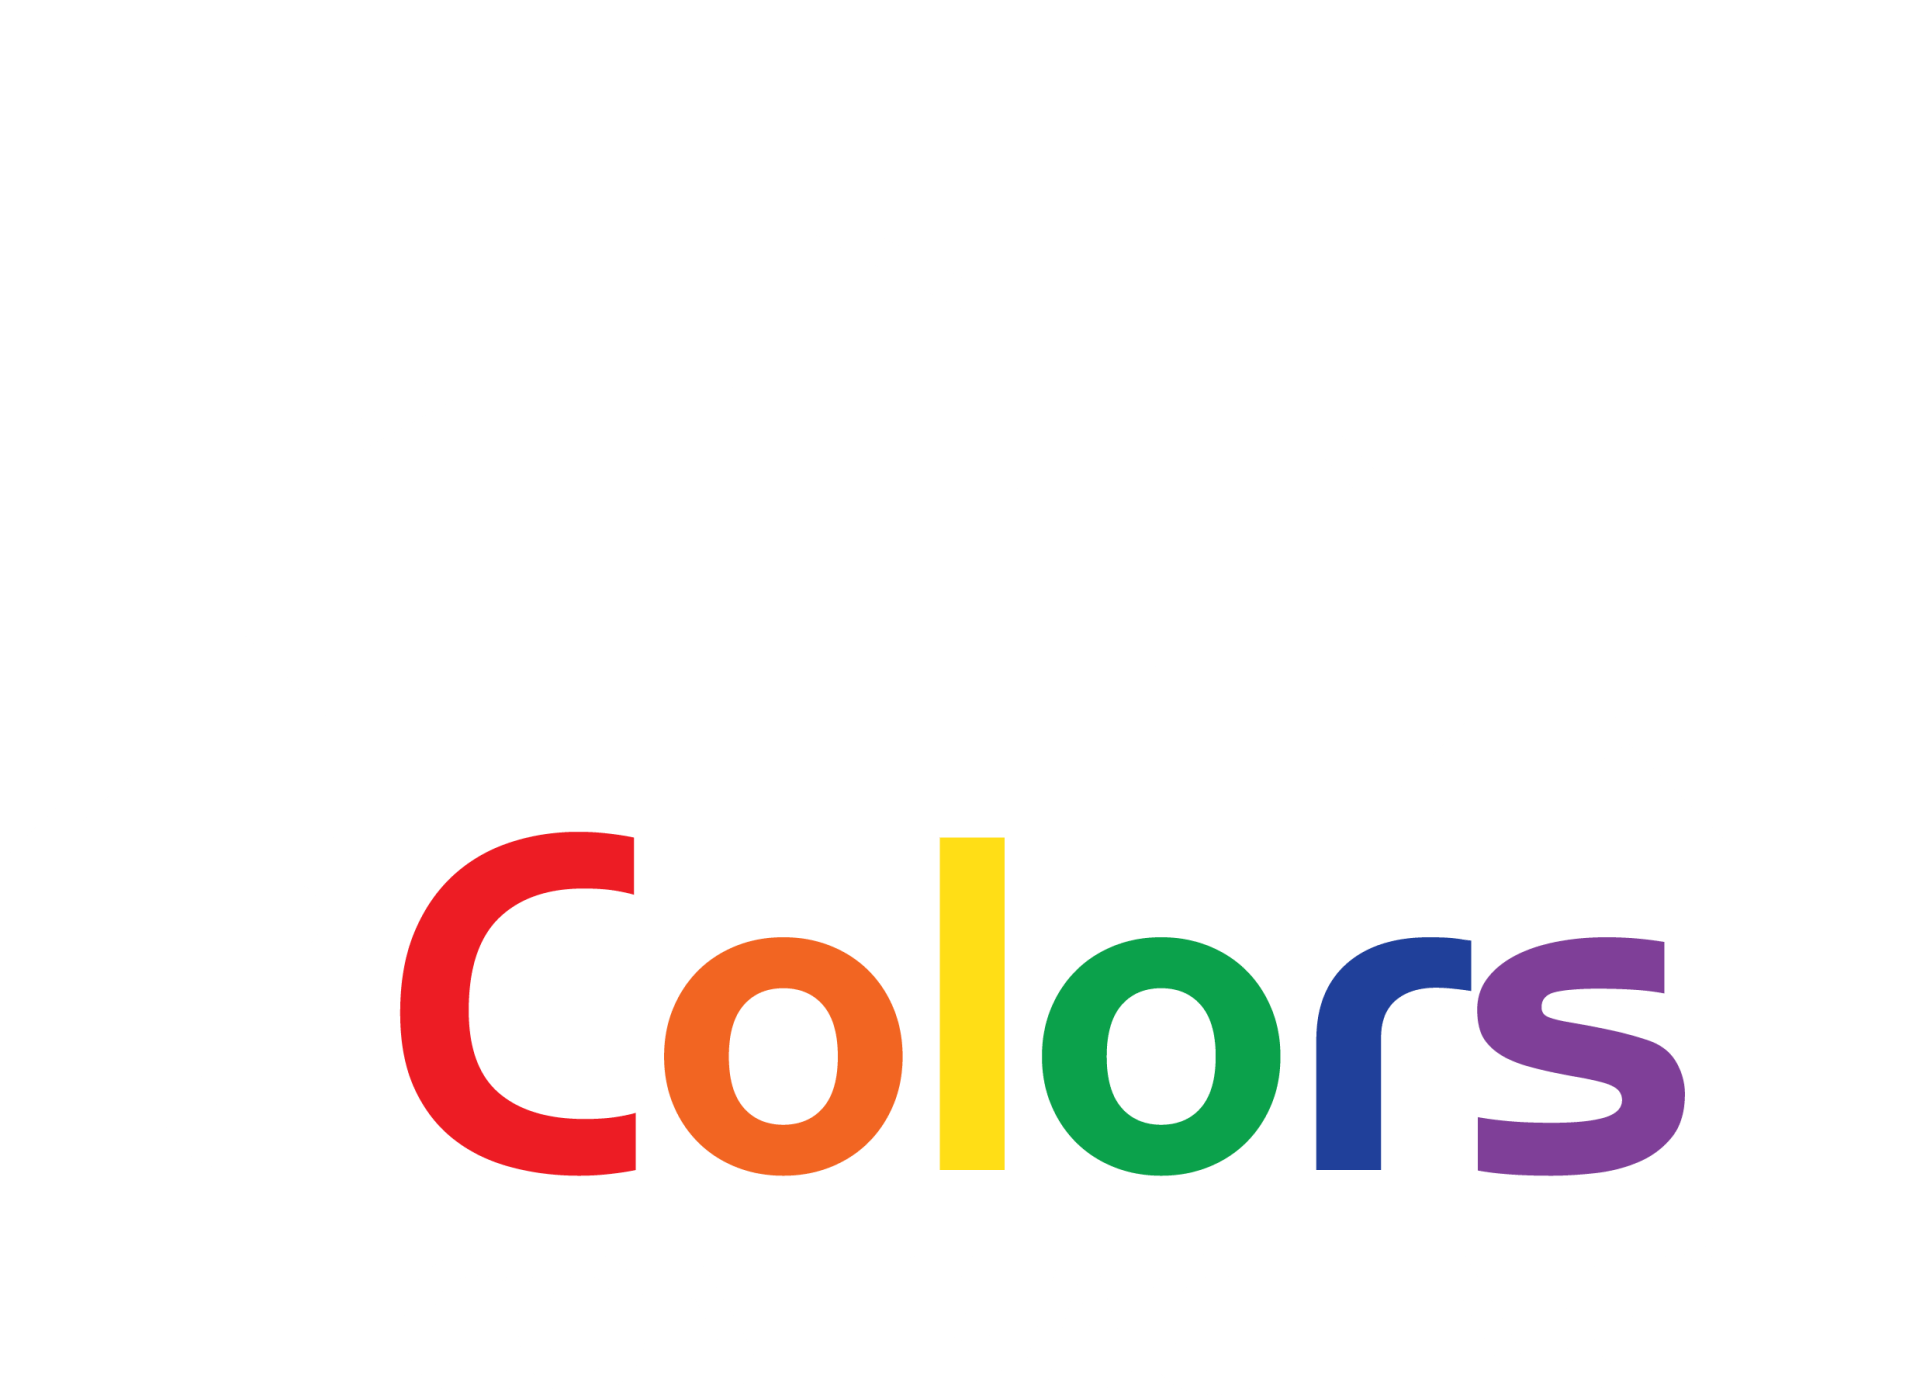 Tru Colors Contracting logo